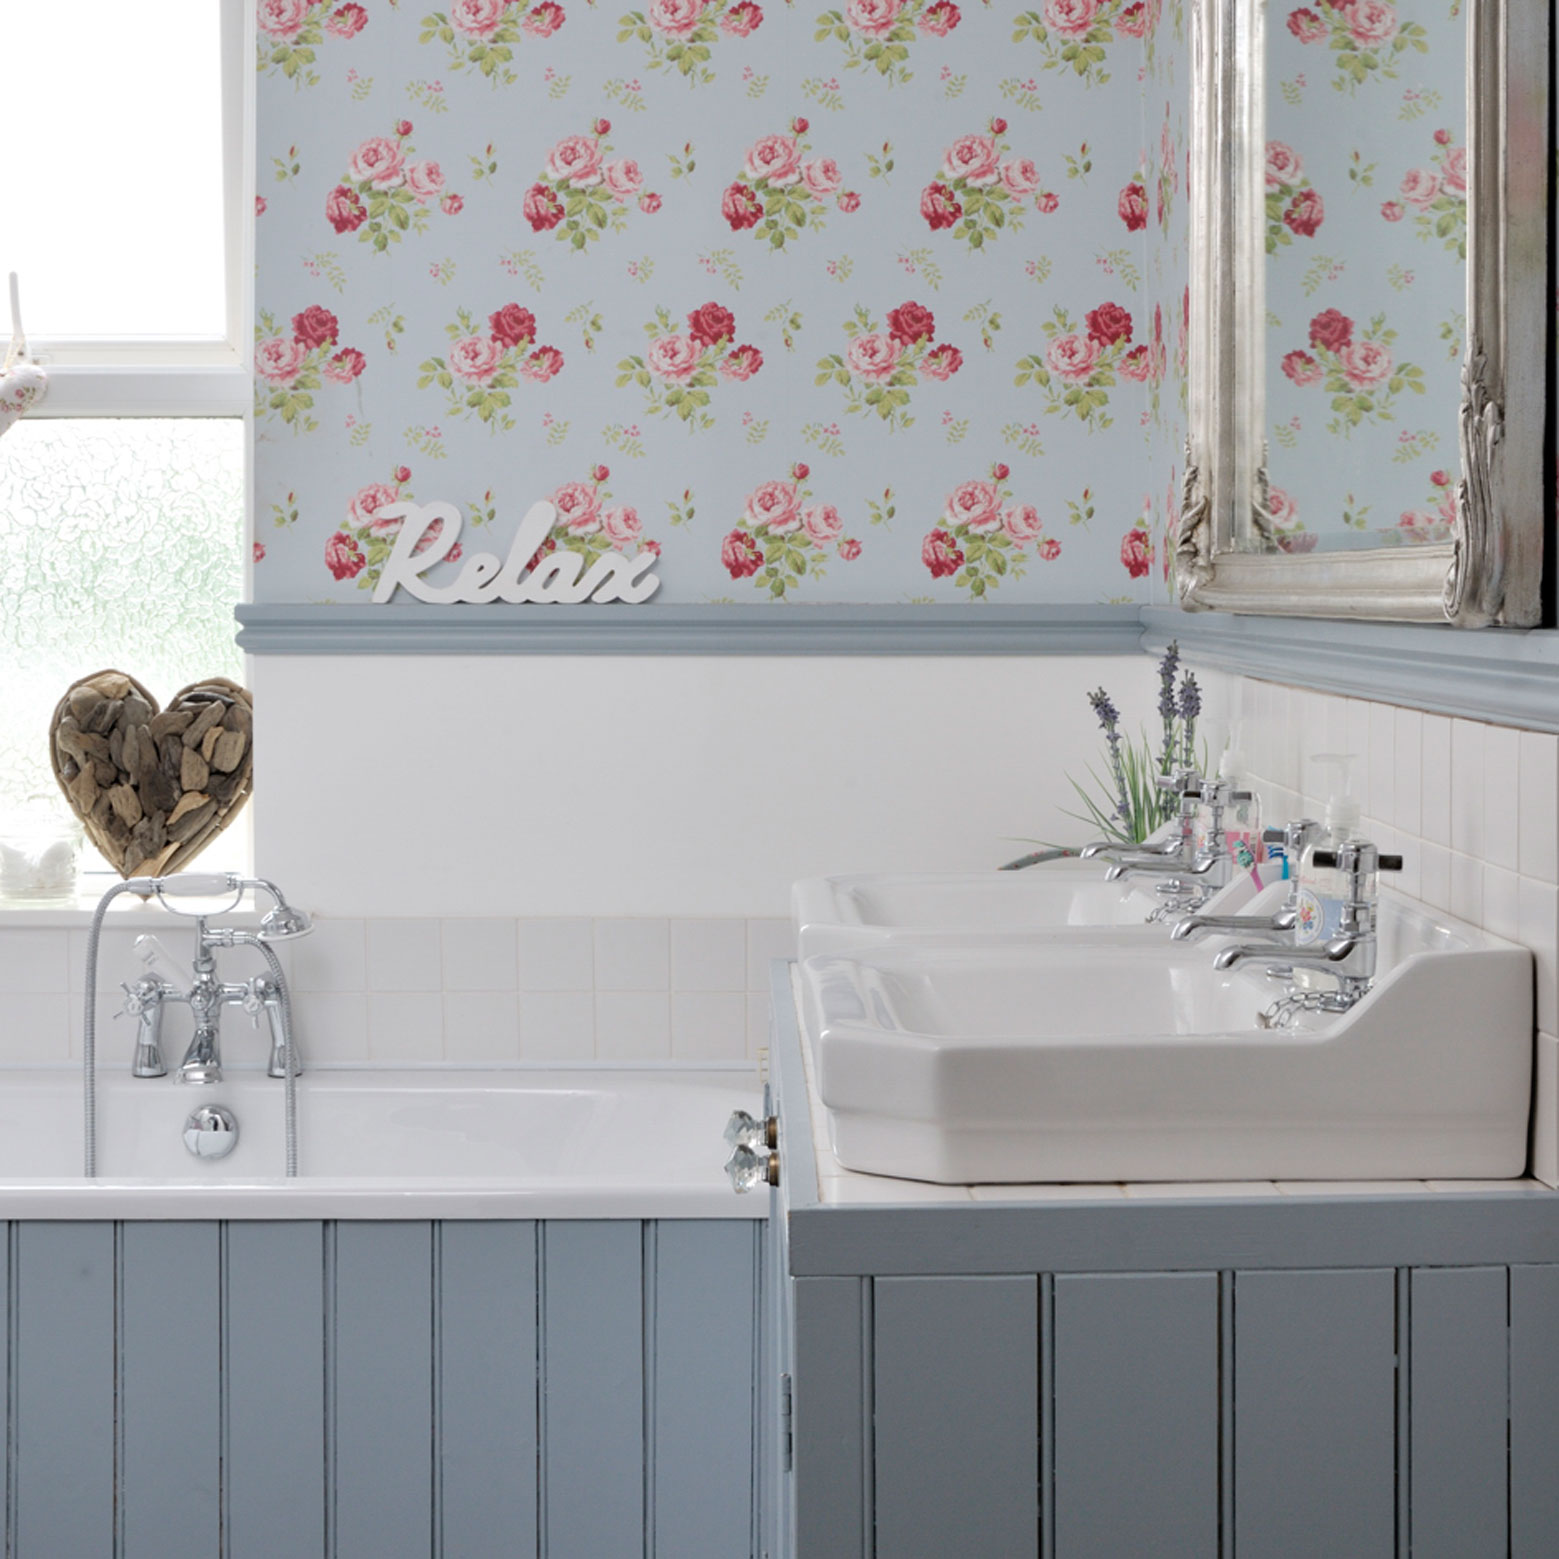 Panel your bath | Bathroom ideas | Bathroom decorating | PHOTO GALLERY 